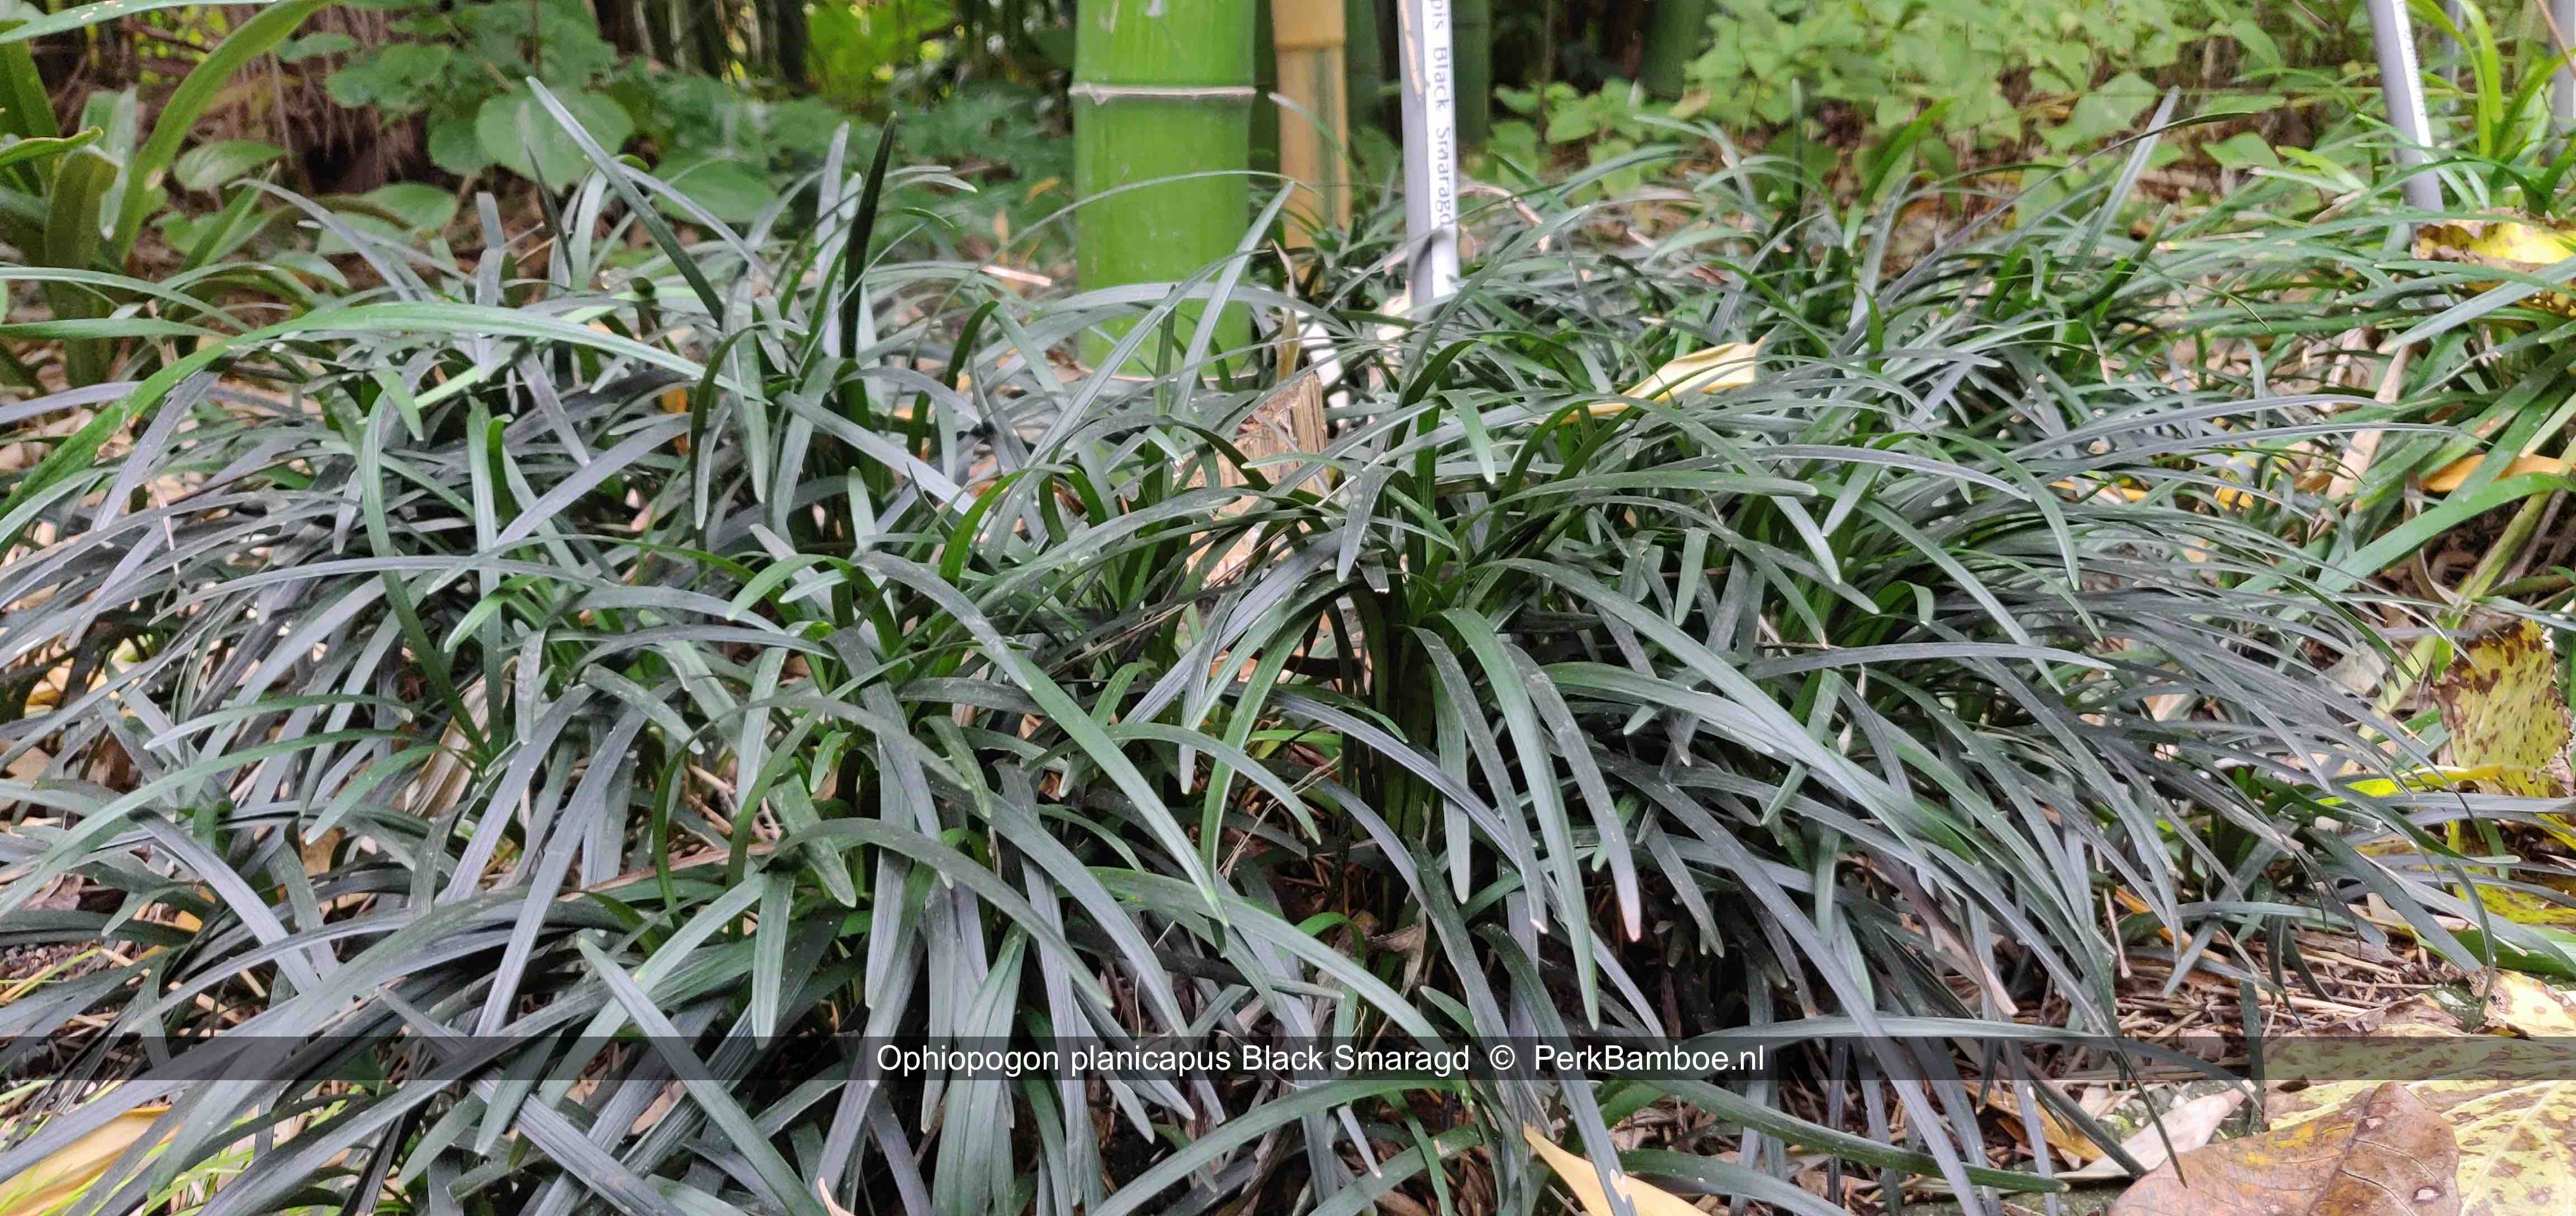 Ophiopogon planiscapus Black Smaragd voor Phyllostachys Shanghai 4 foto1 PerkBamboe nl